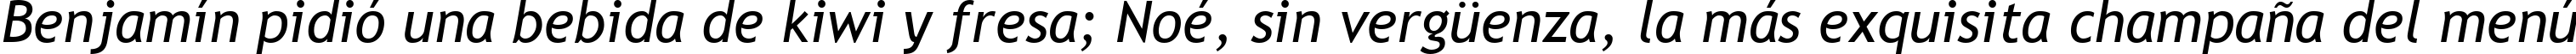 Пример написания шрифтом Trebuchet MS Italic текста на испанском